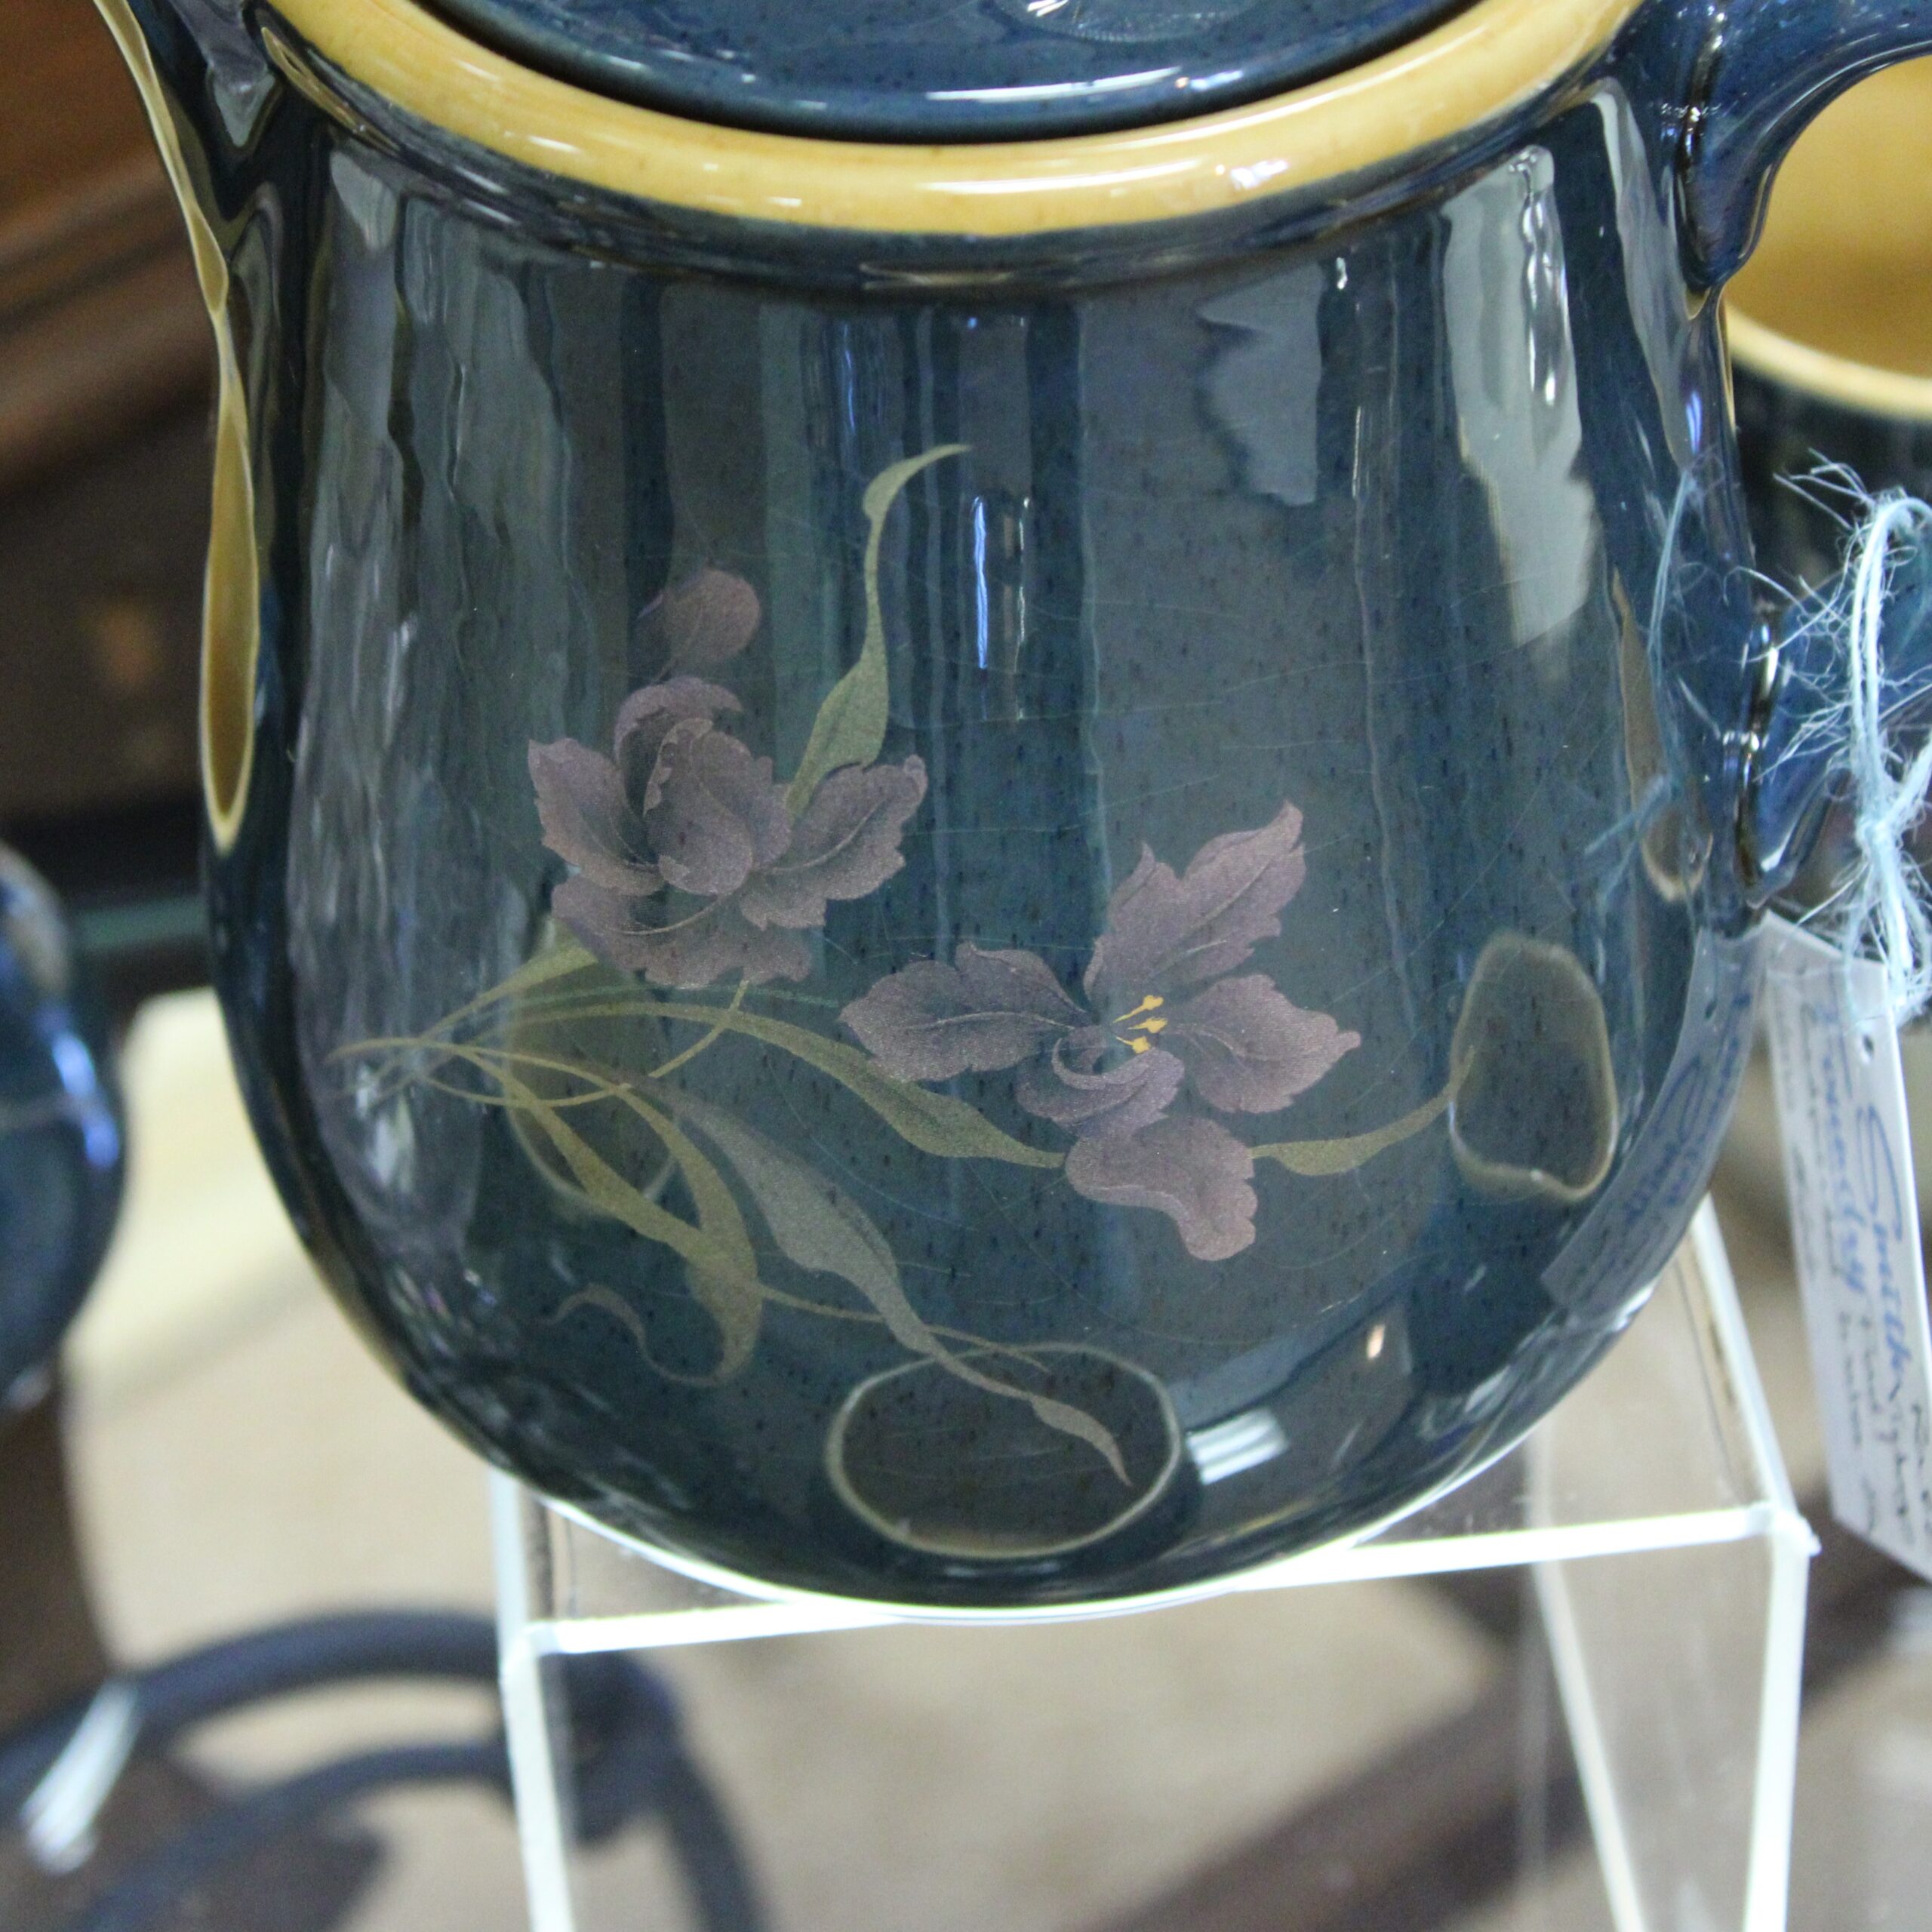 RARE – Vintage Handmade Painted Pottery Coffee Pot Set – Made in Wales, UK  – 4 Mugs, Cream & Sugar – #2555 – It's Bazaar on 21st Street